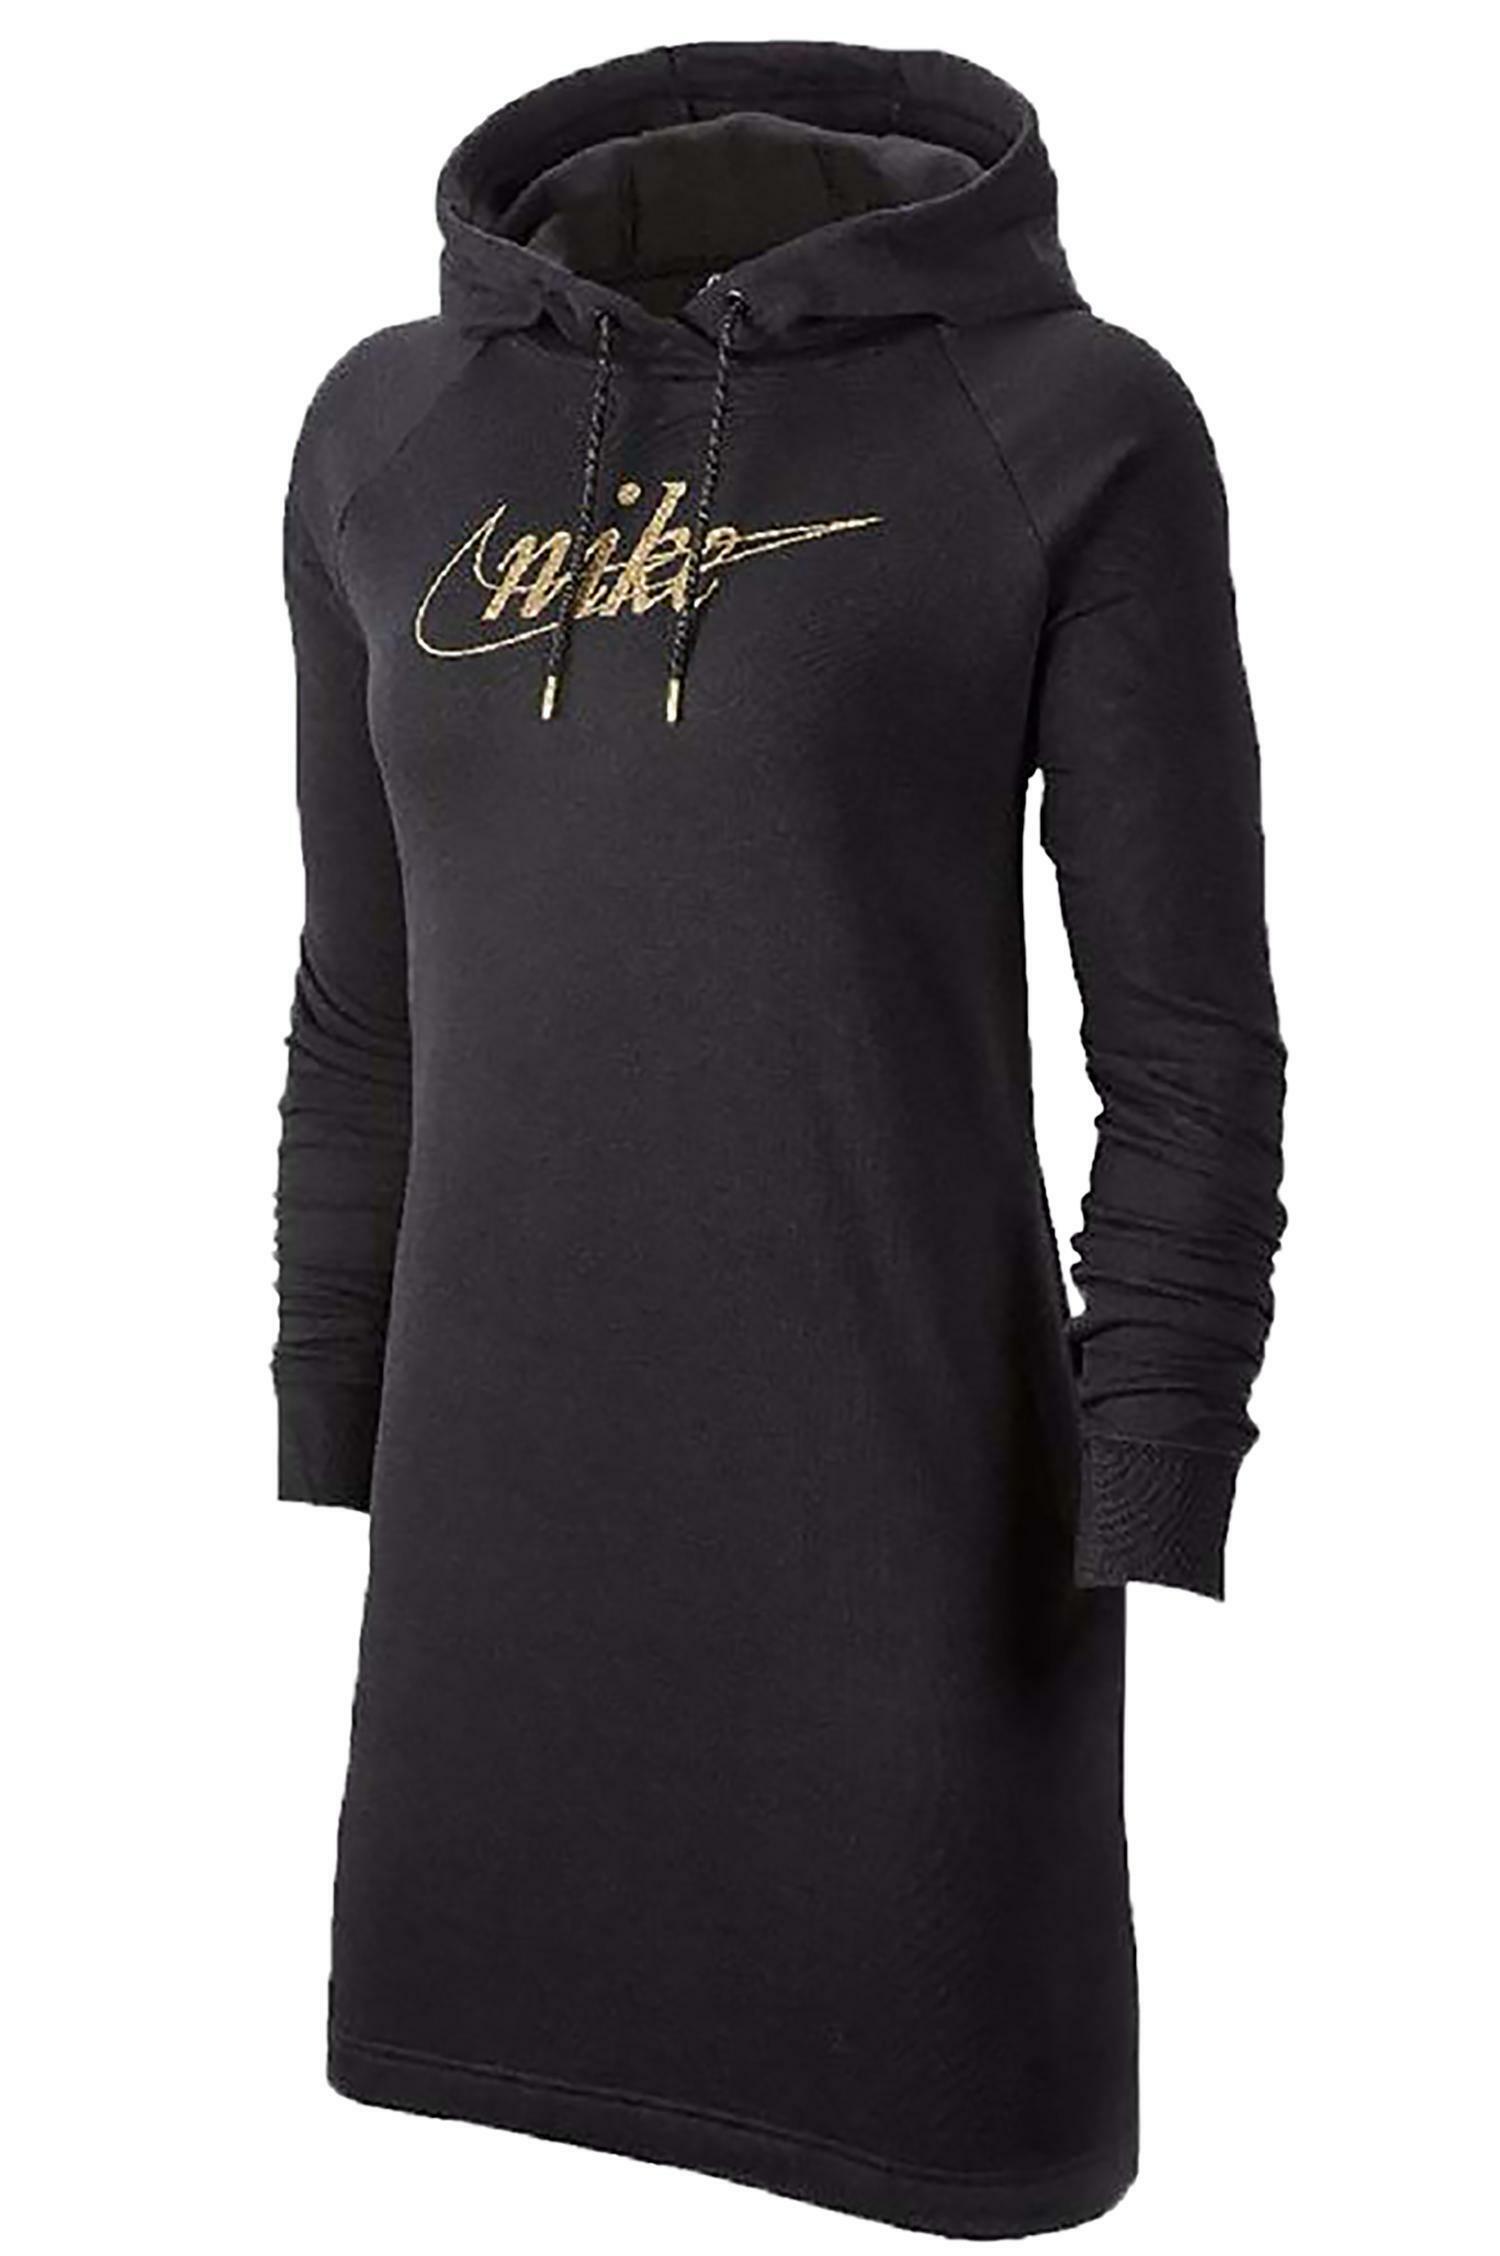 Nike vestito donna nero bv4560010